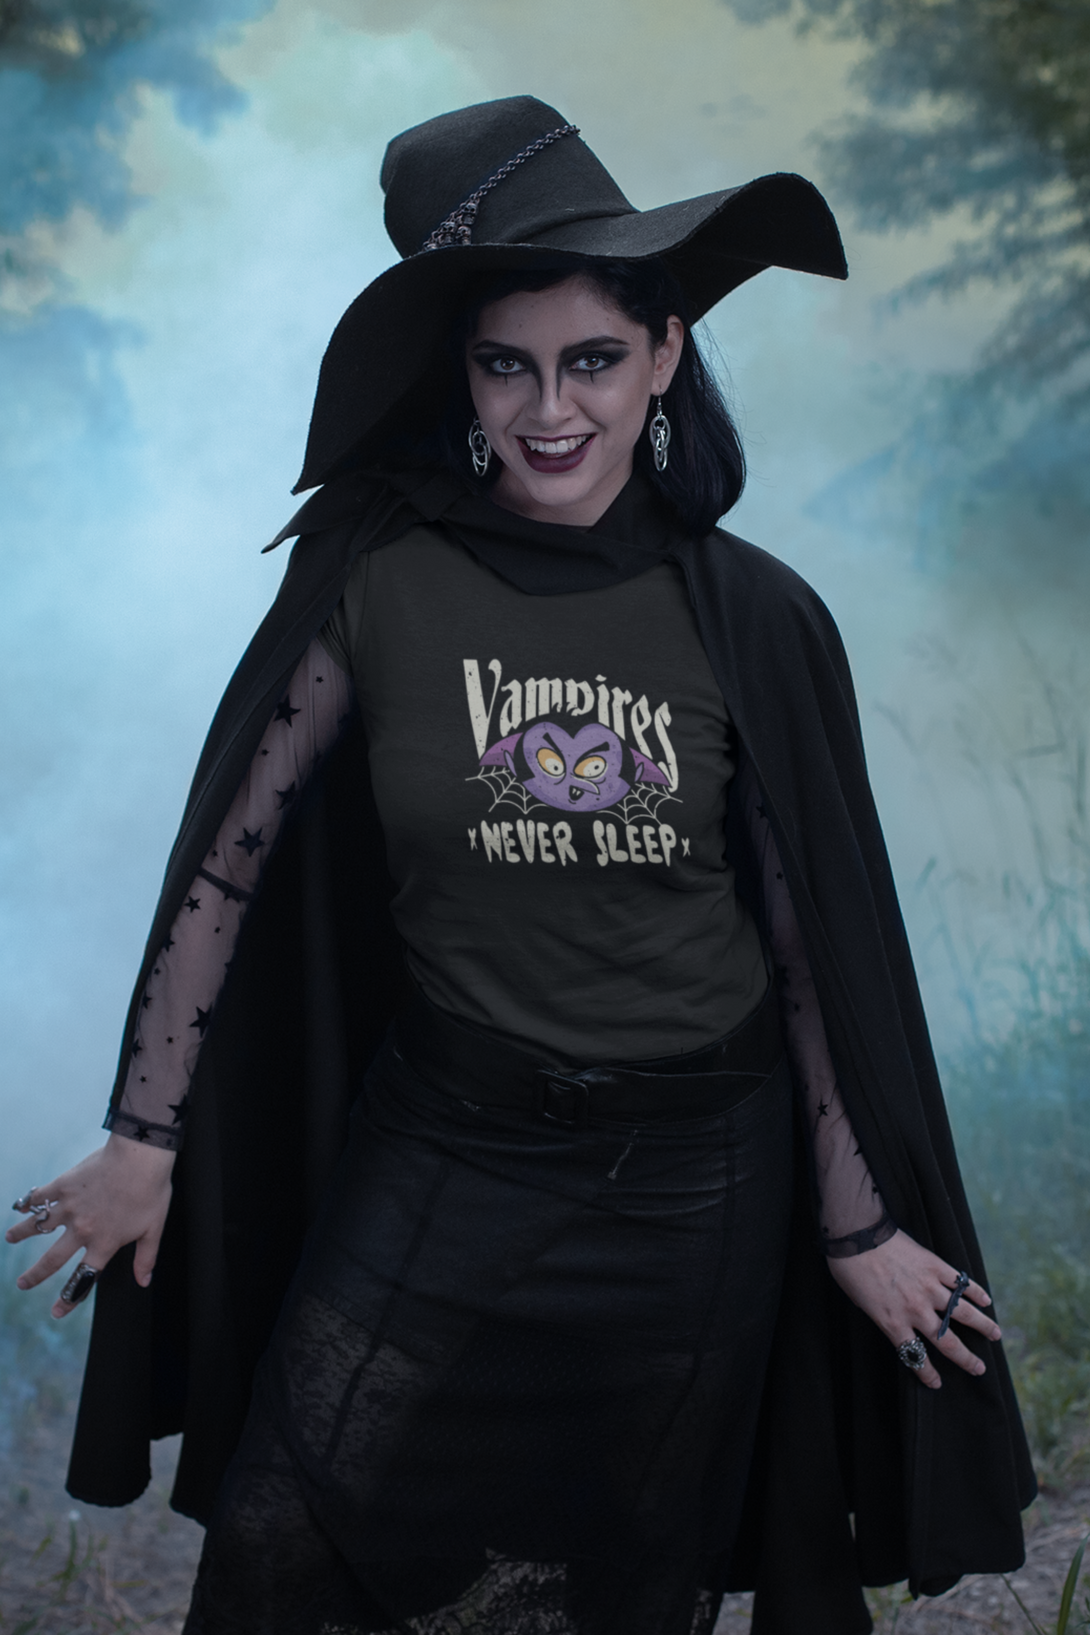 Vampires Never Sleep Printed T-Shirt For Women - WowWaves - 4